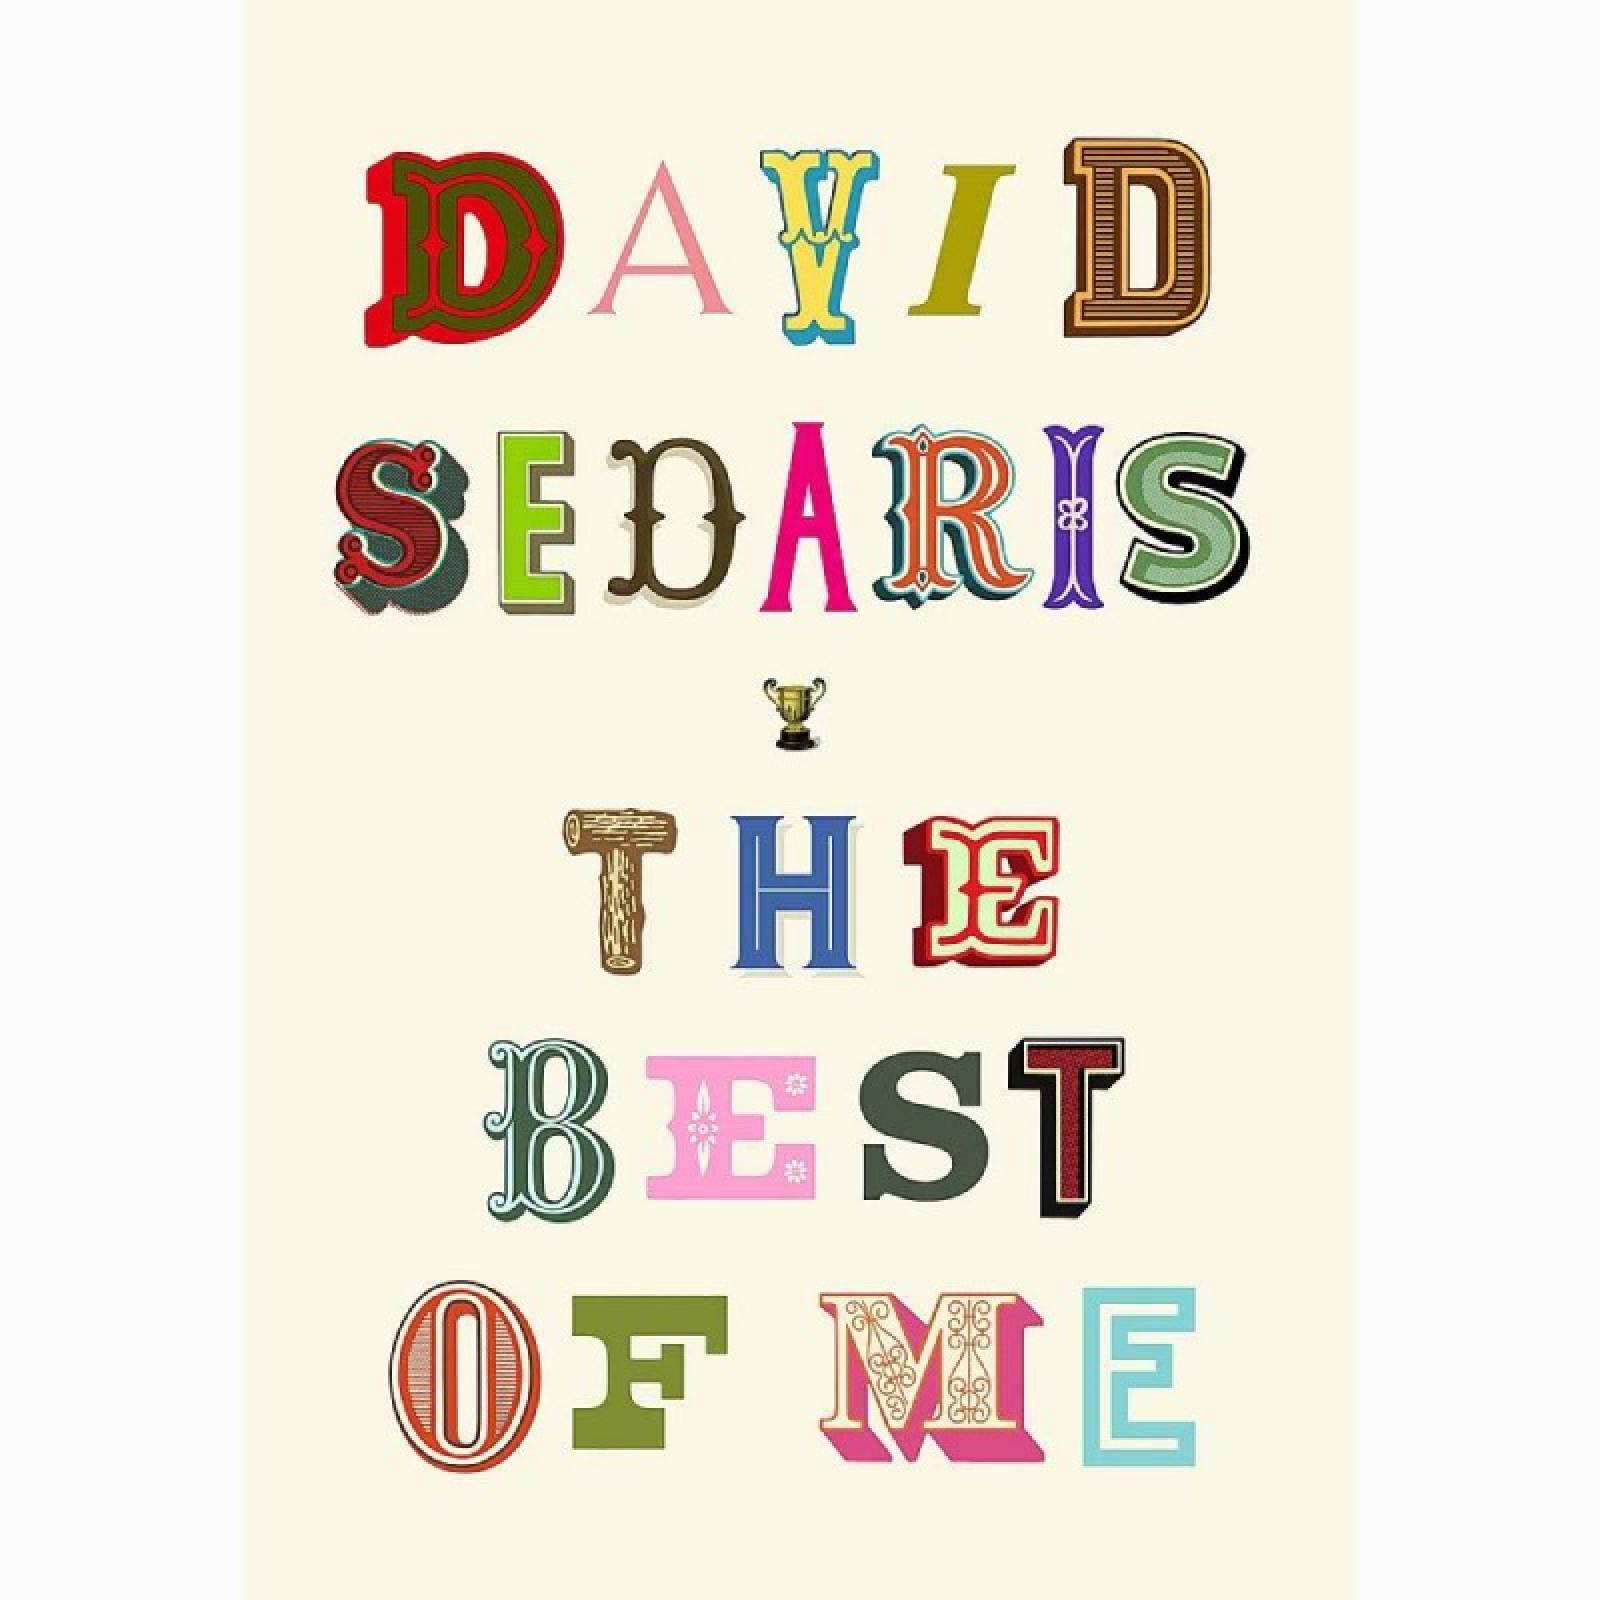 The Best Of Me By David Sedaris - Paperback Book